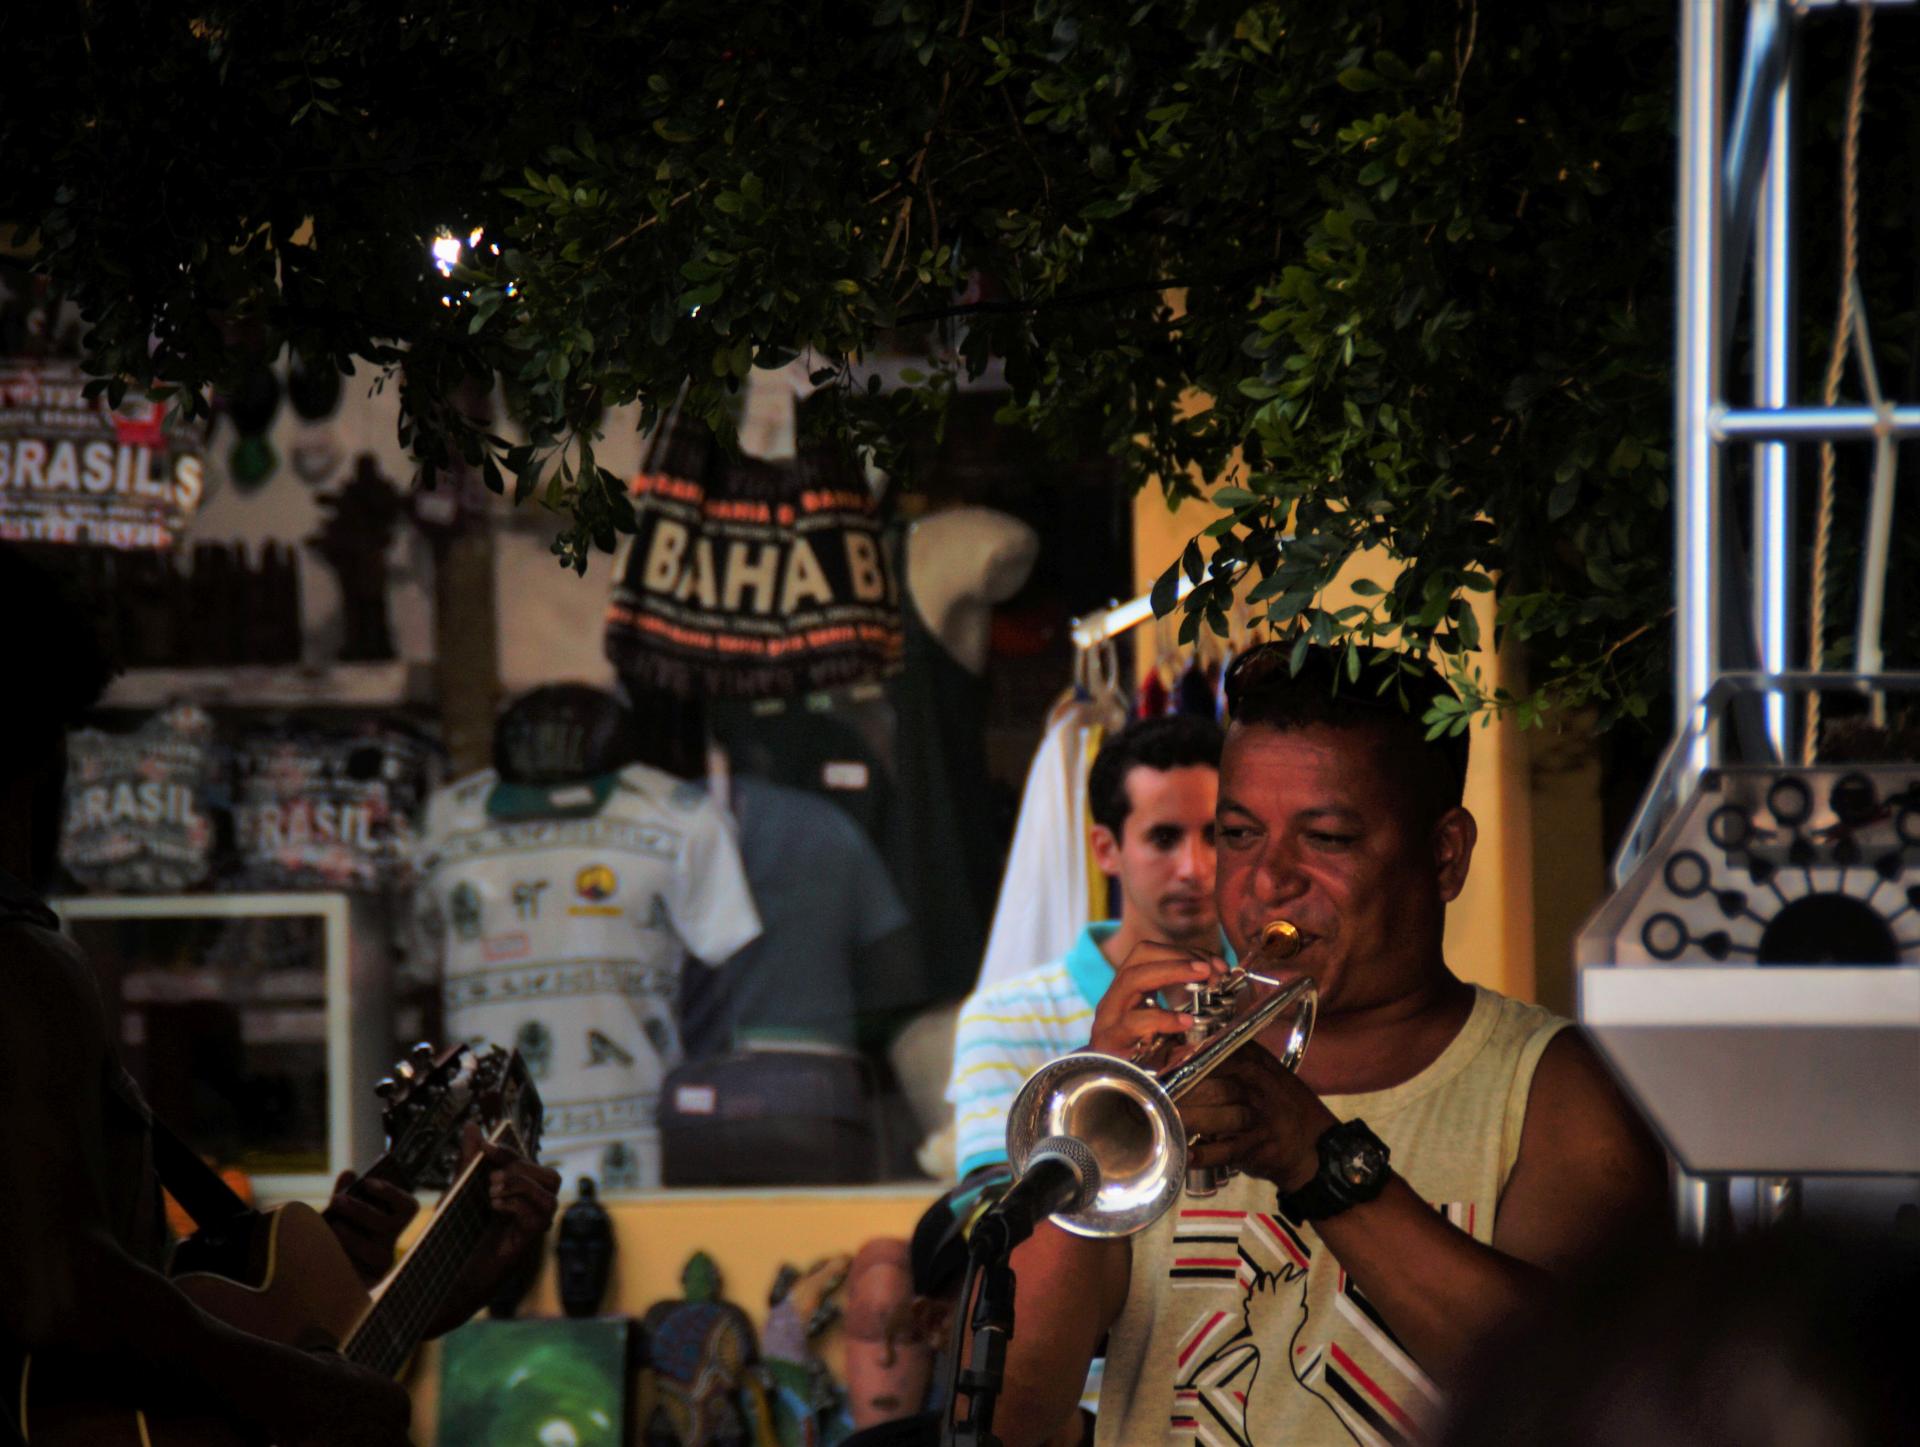 Samba rock trumpeter in Bahia